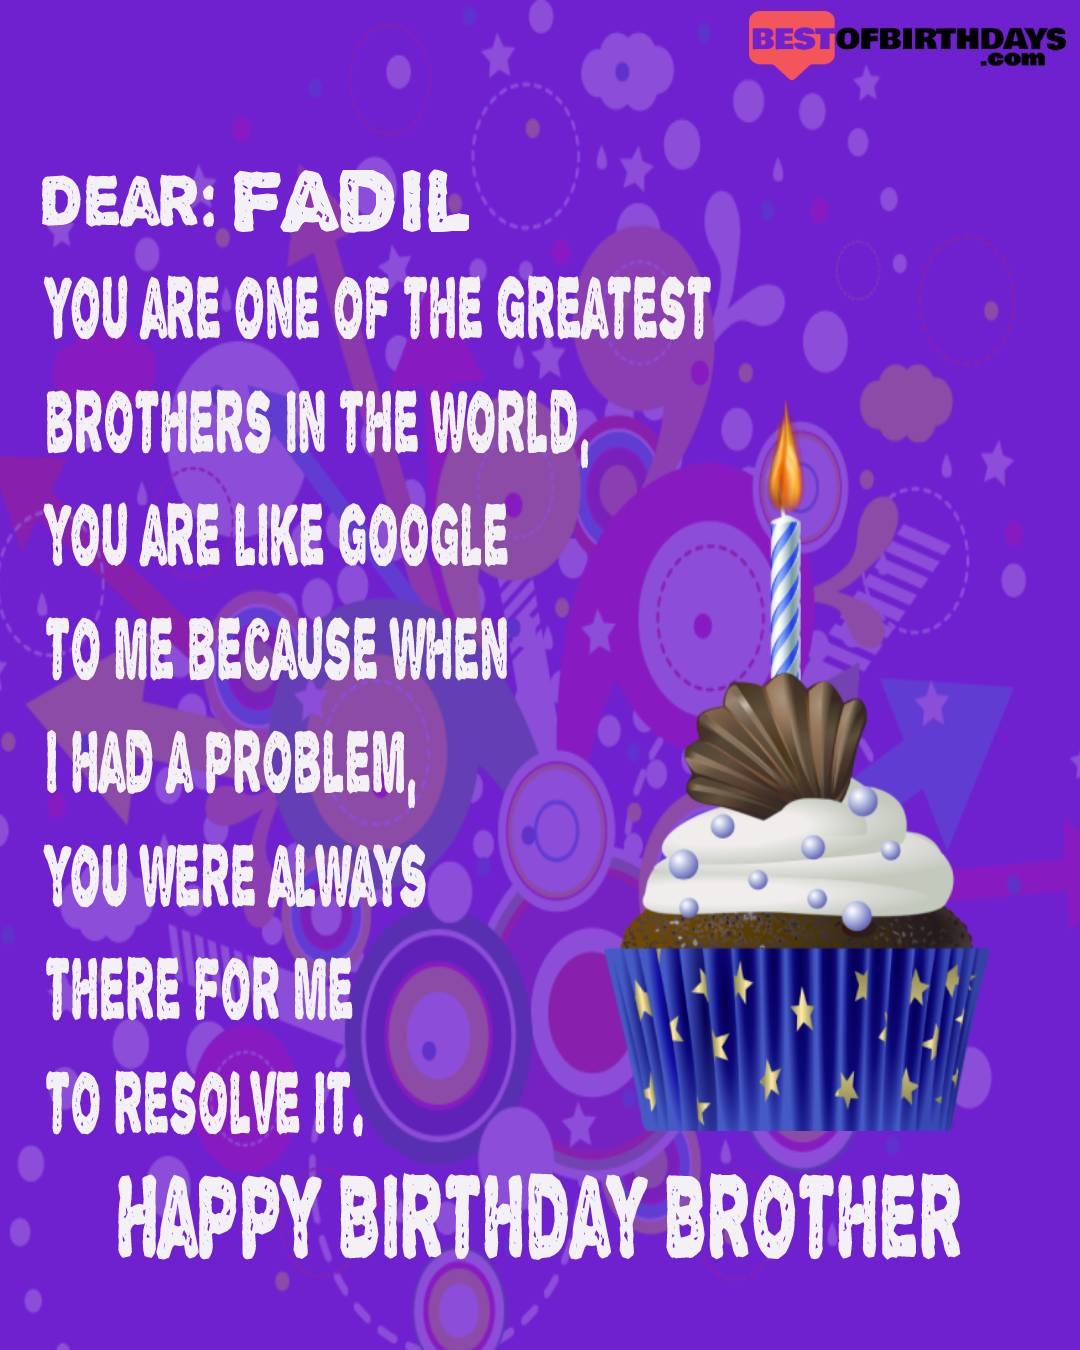 Happy birthday fadil bhai brother bro